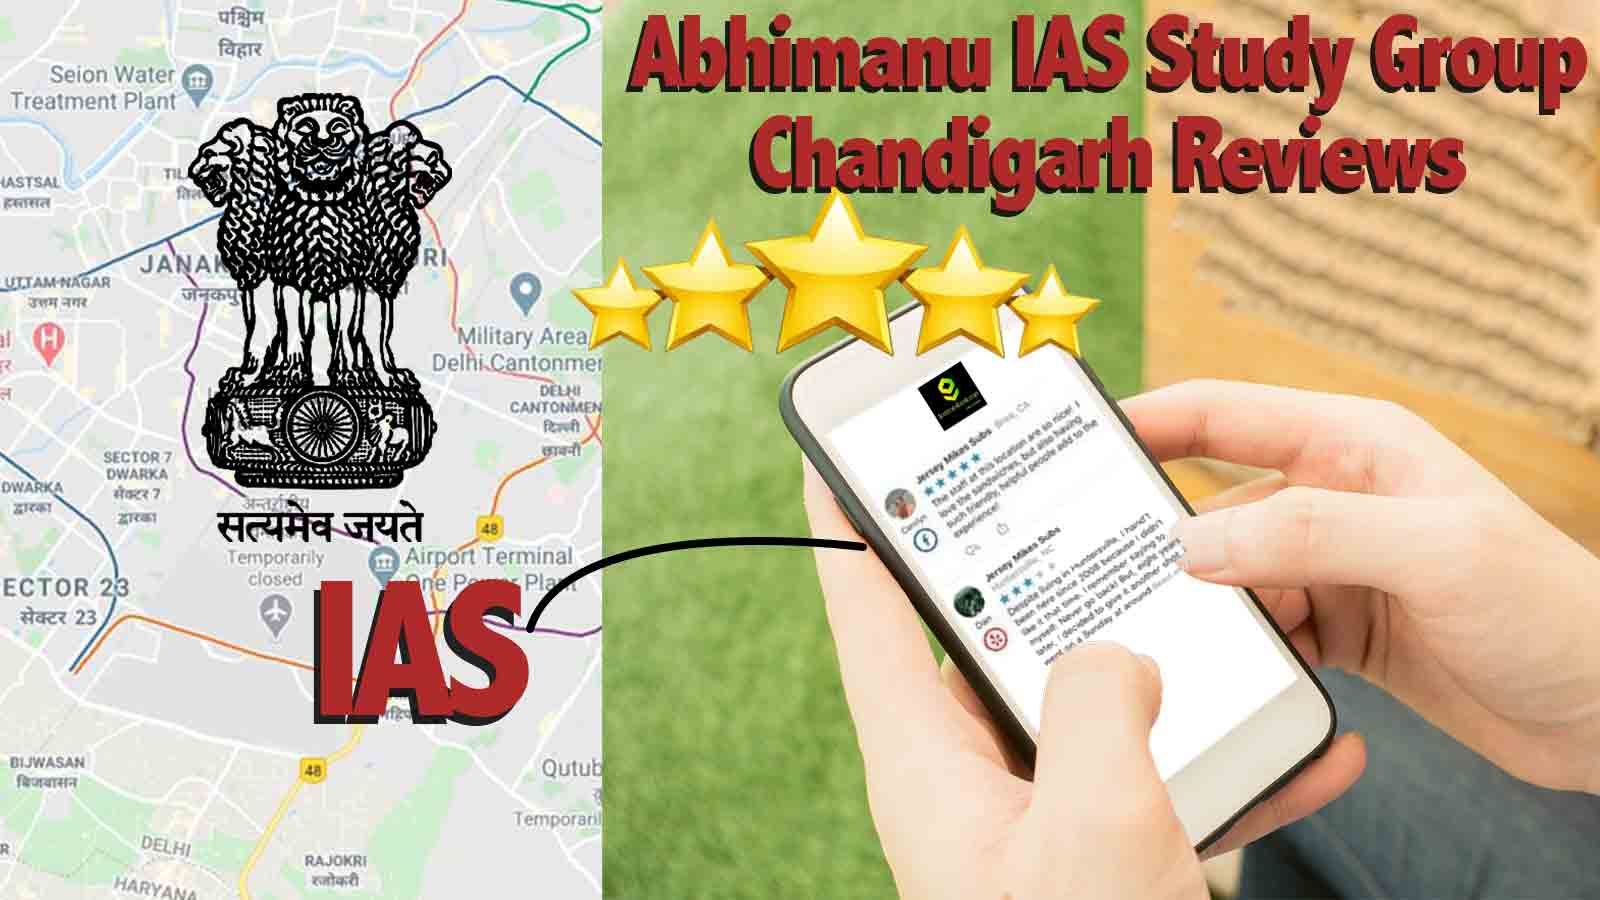 Abhimanu IAS Study Chandigarh Reviews